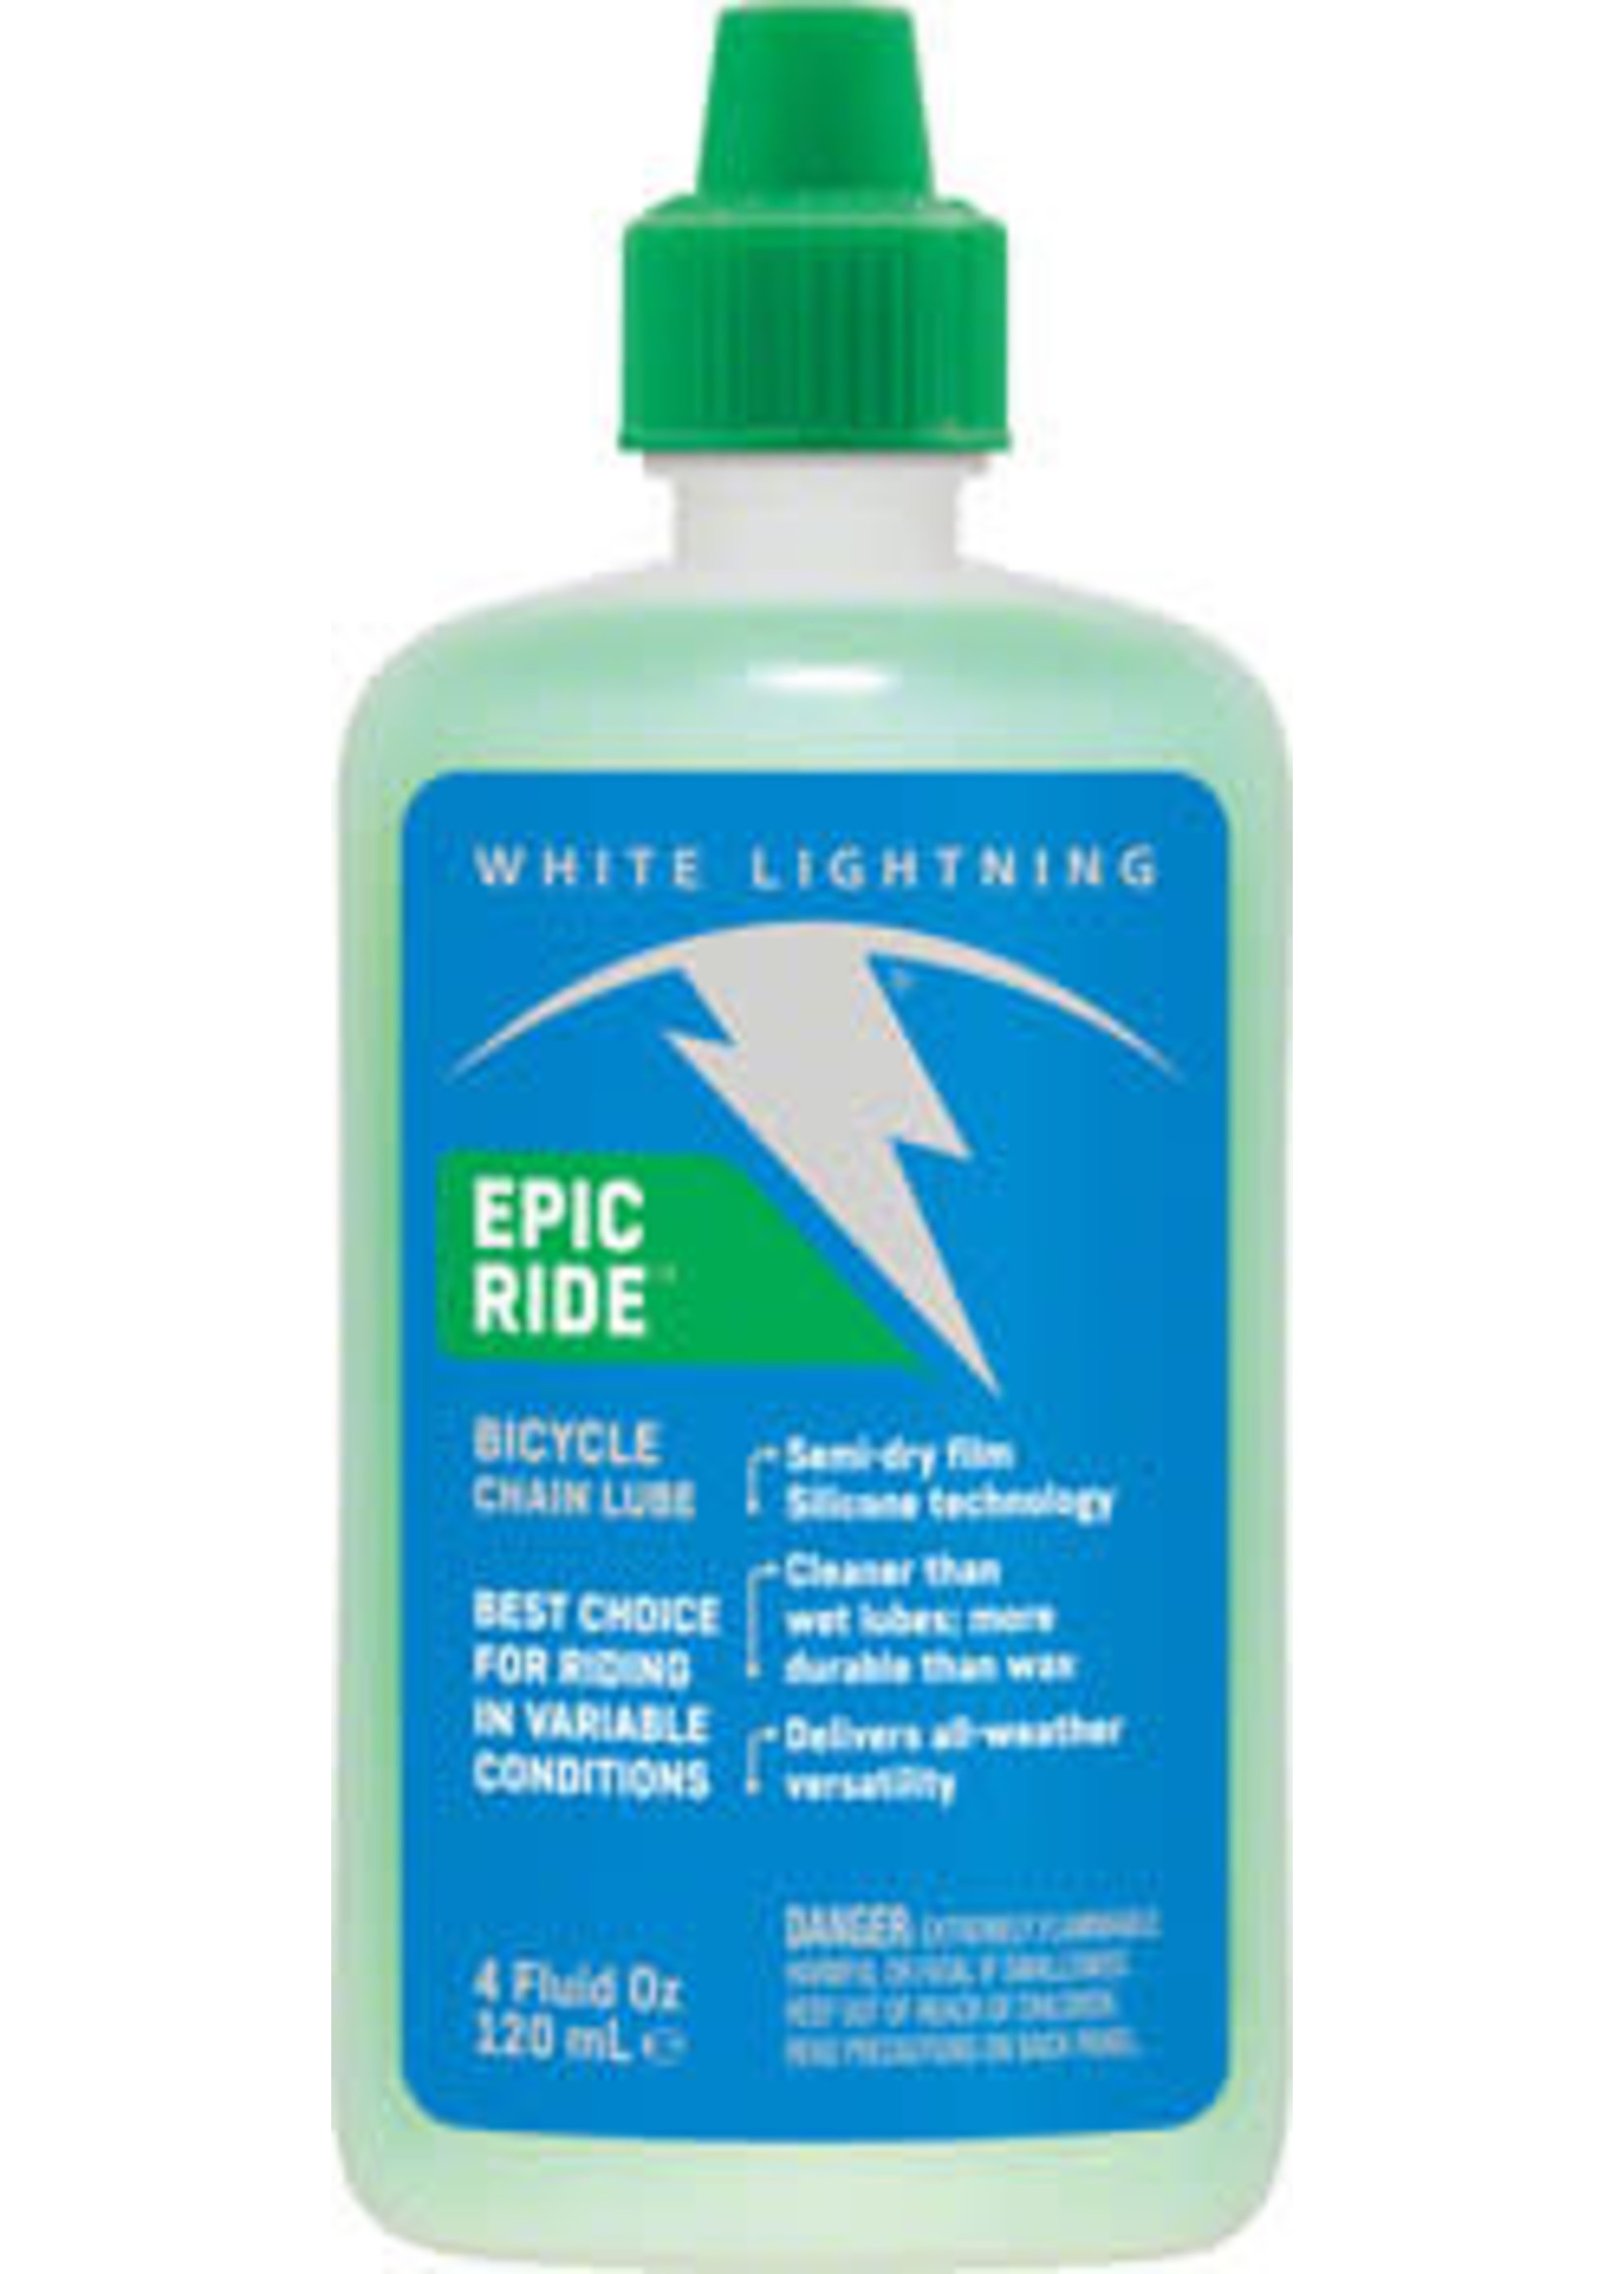 WHITE LIGHTNING White Lightning Epic Ride Bike Chain Lube - 4 fl oz, Drip